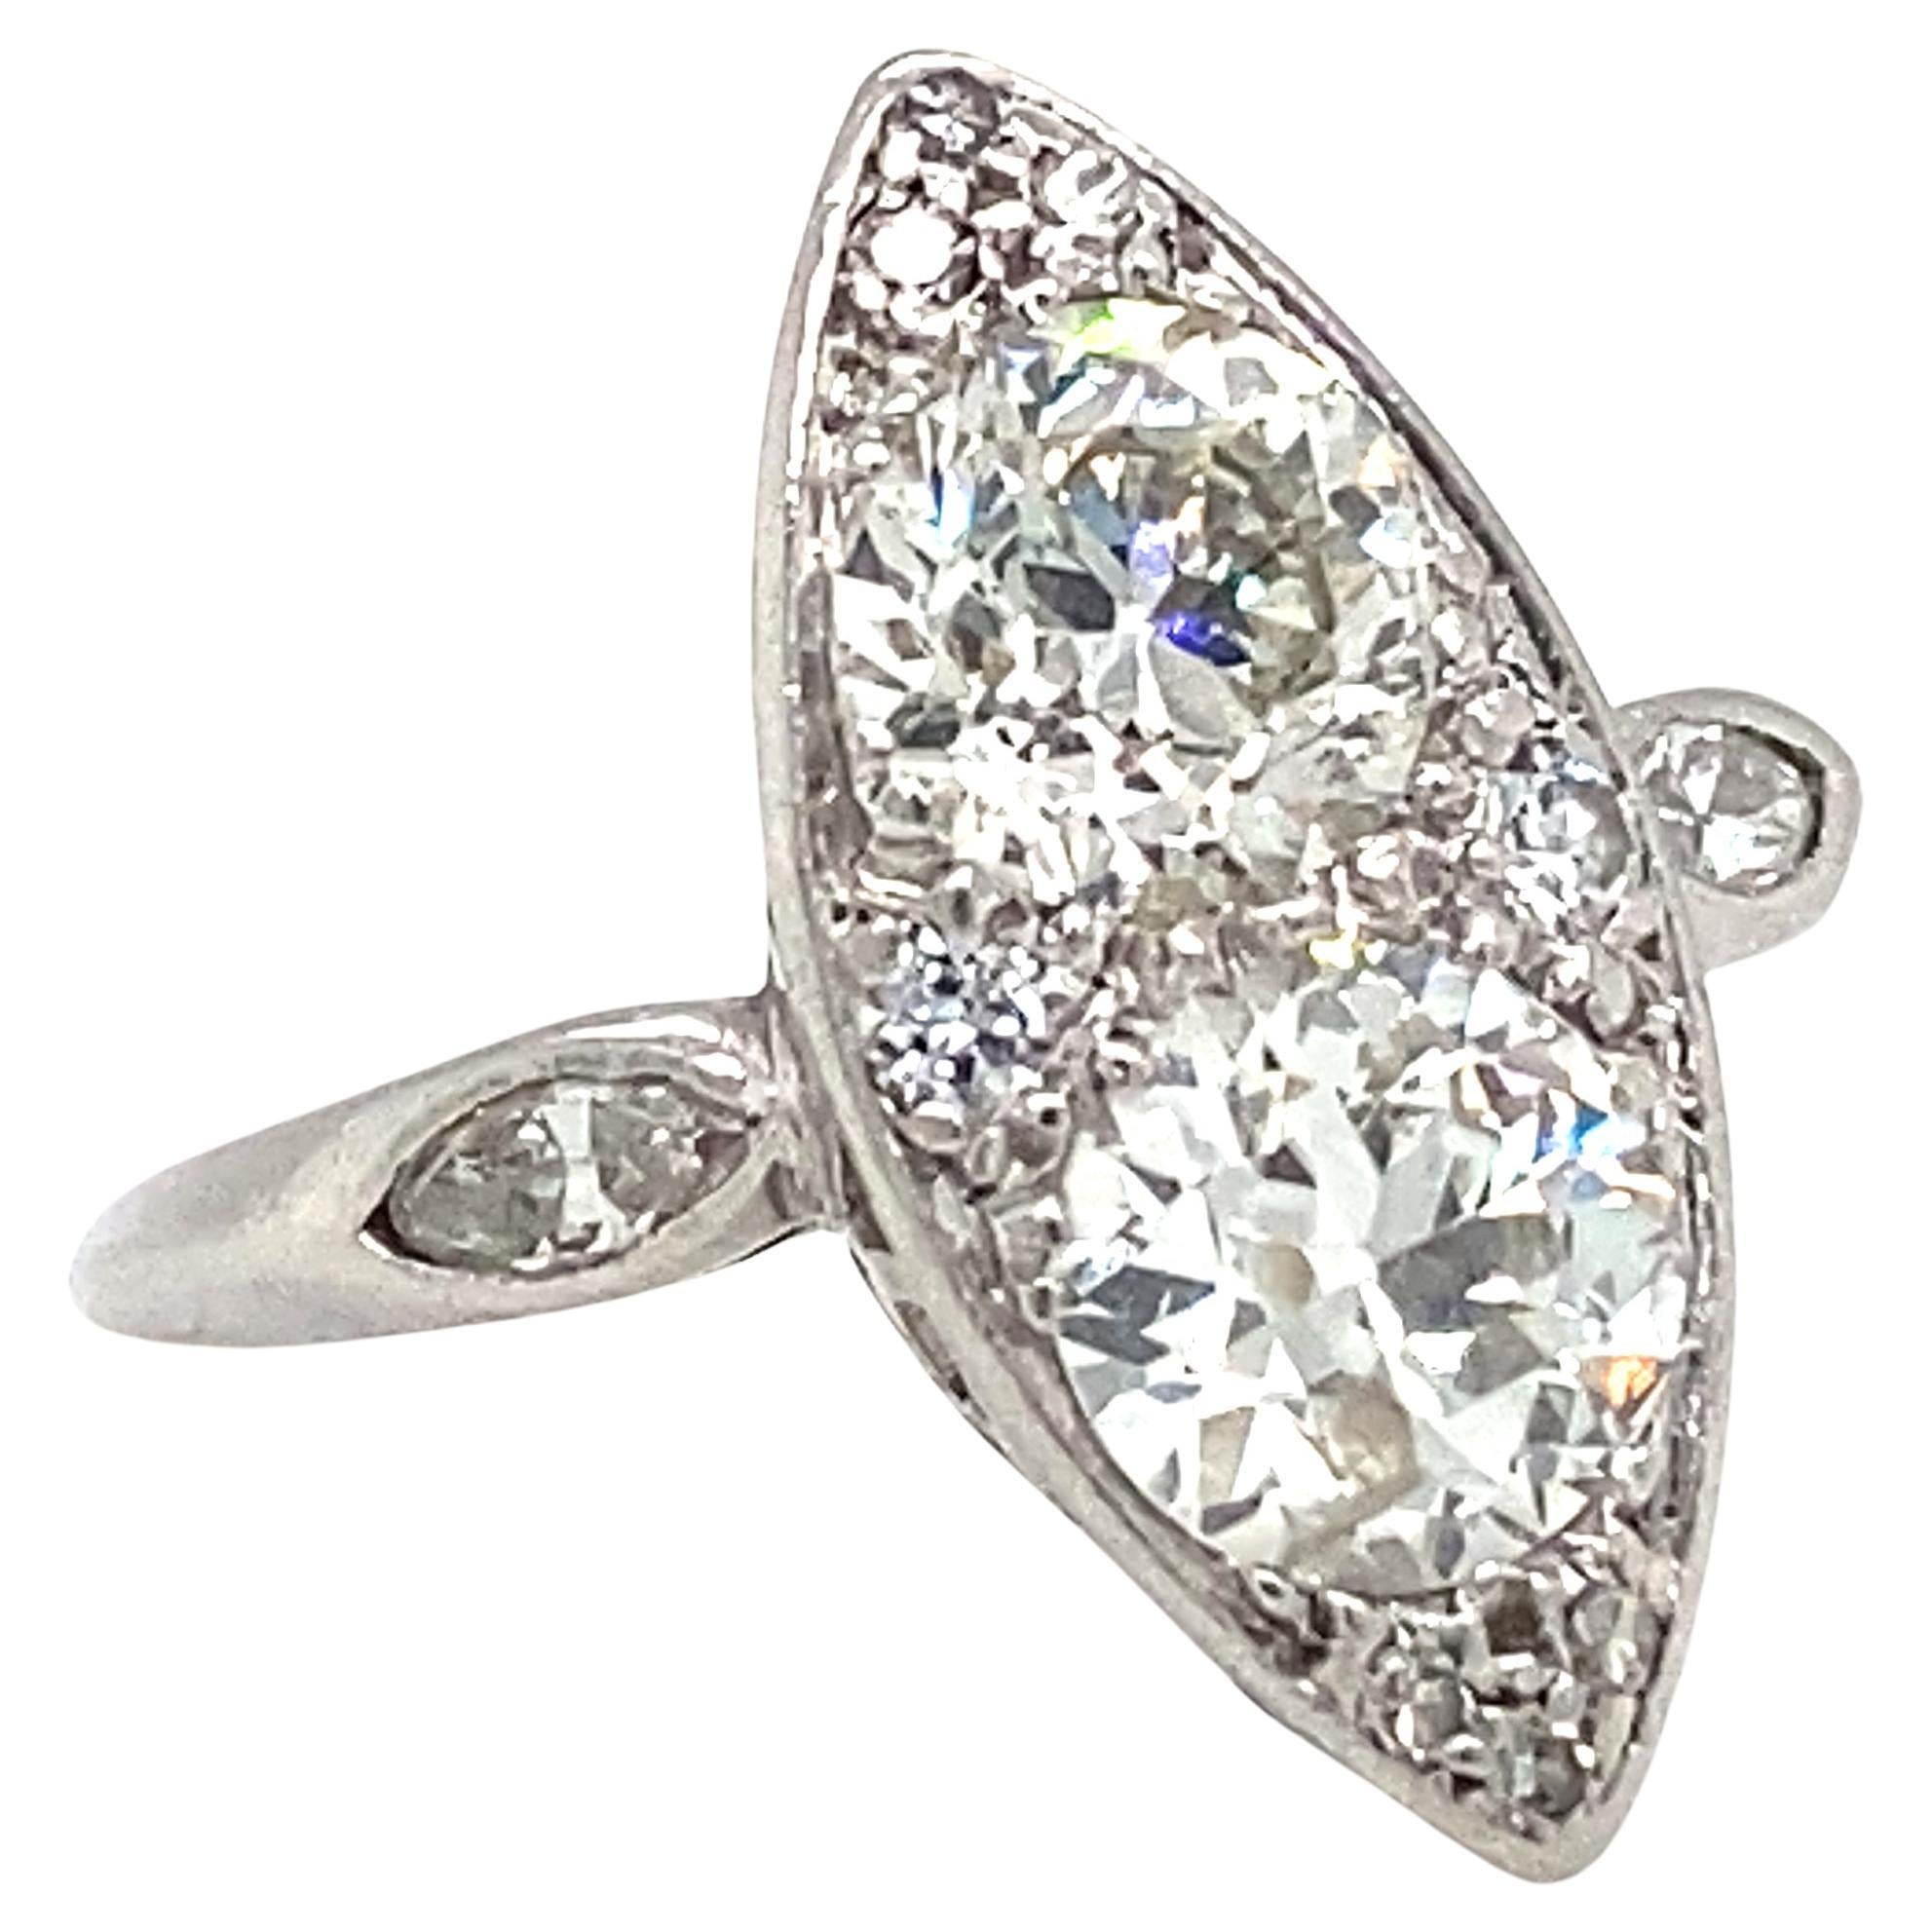 1920s Art Deco 1.60ctw Two Diamond Navette Ring in Platinum